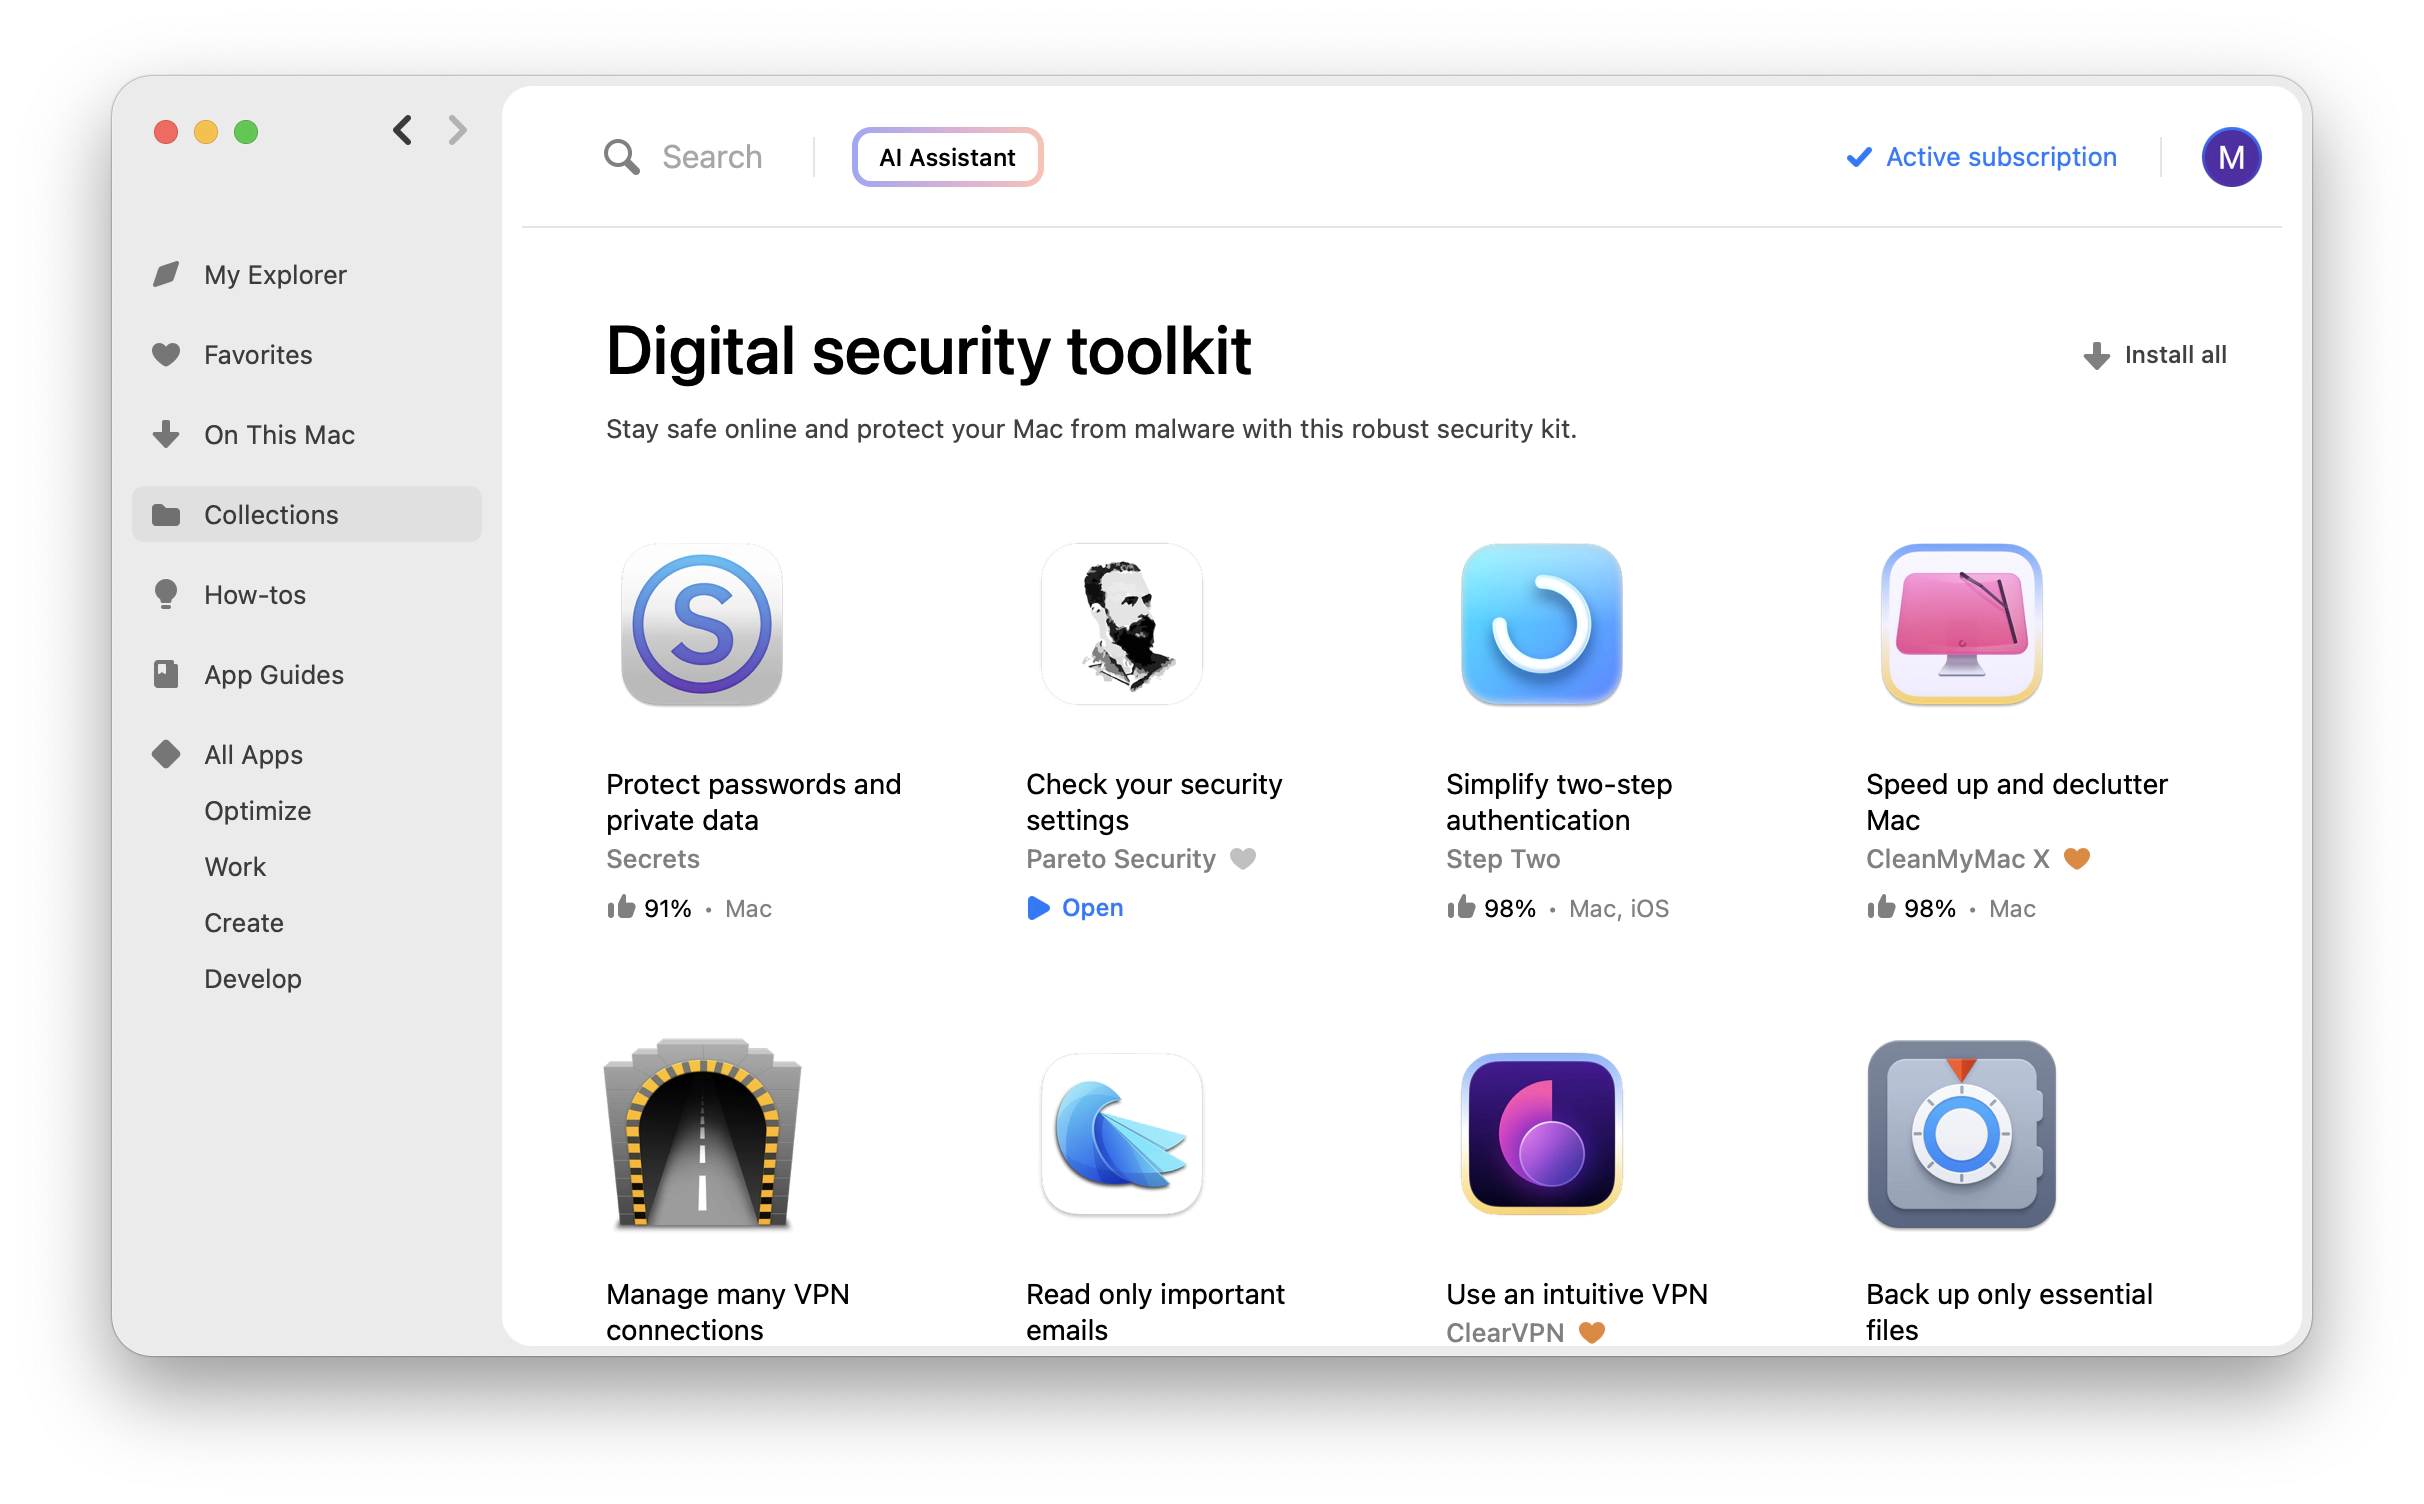 Digital security toolkit